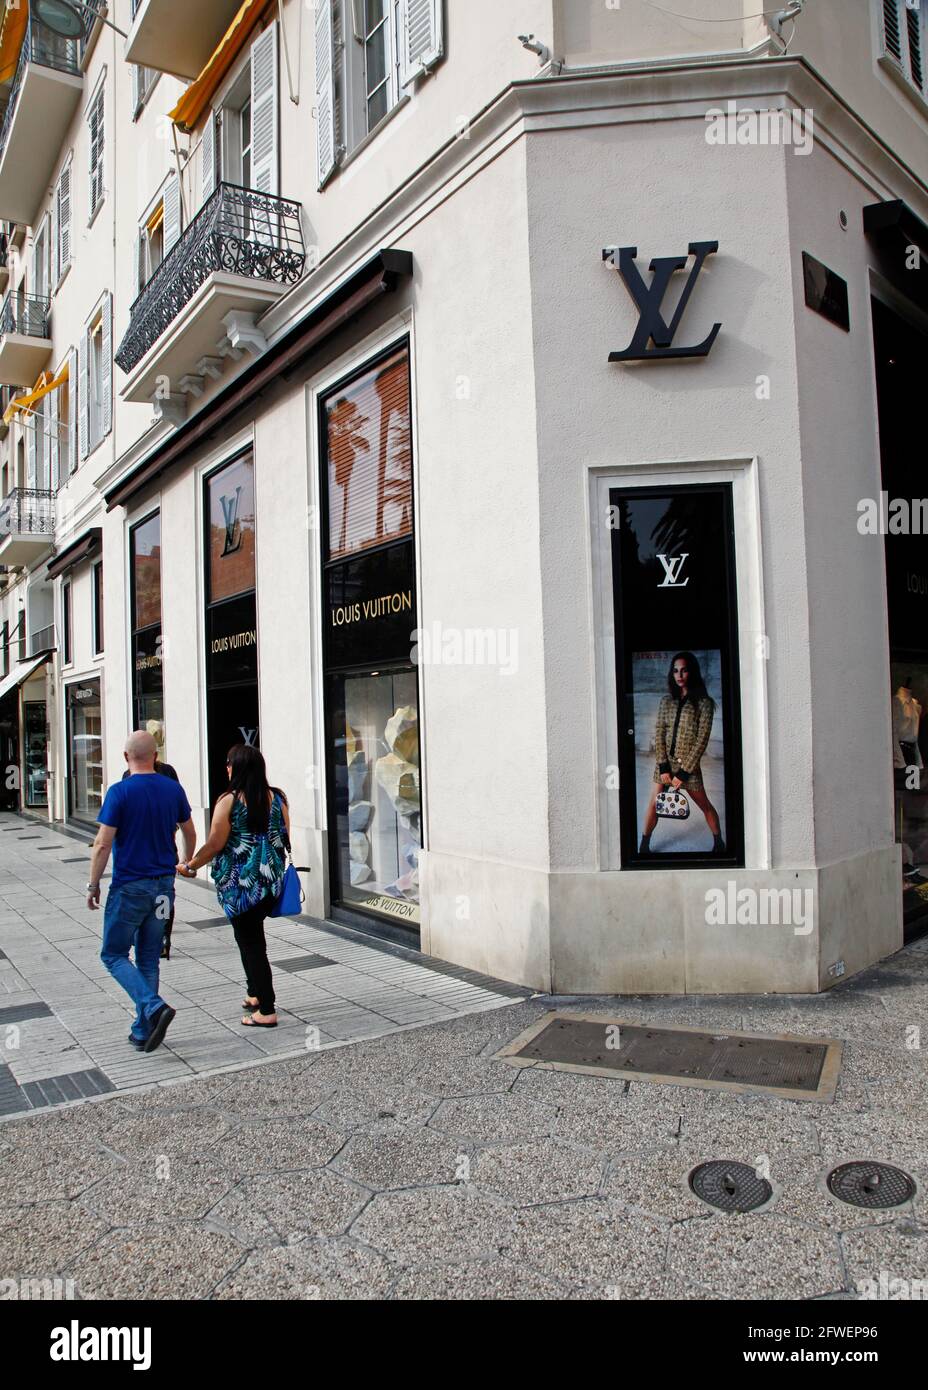 Louis Vuitton shopping trip Stock Photo - Alamy